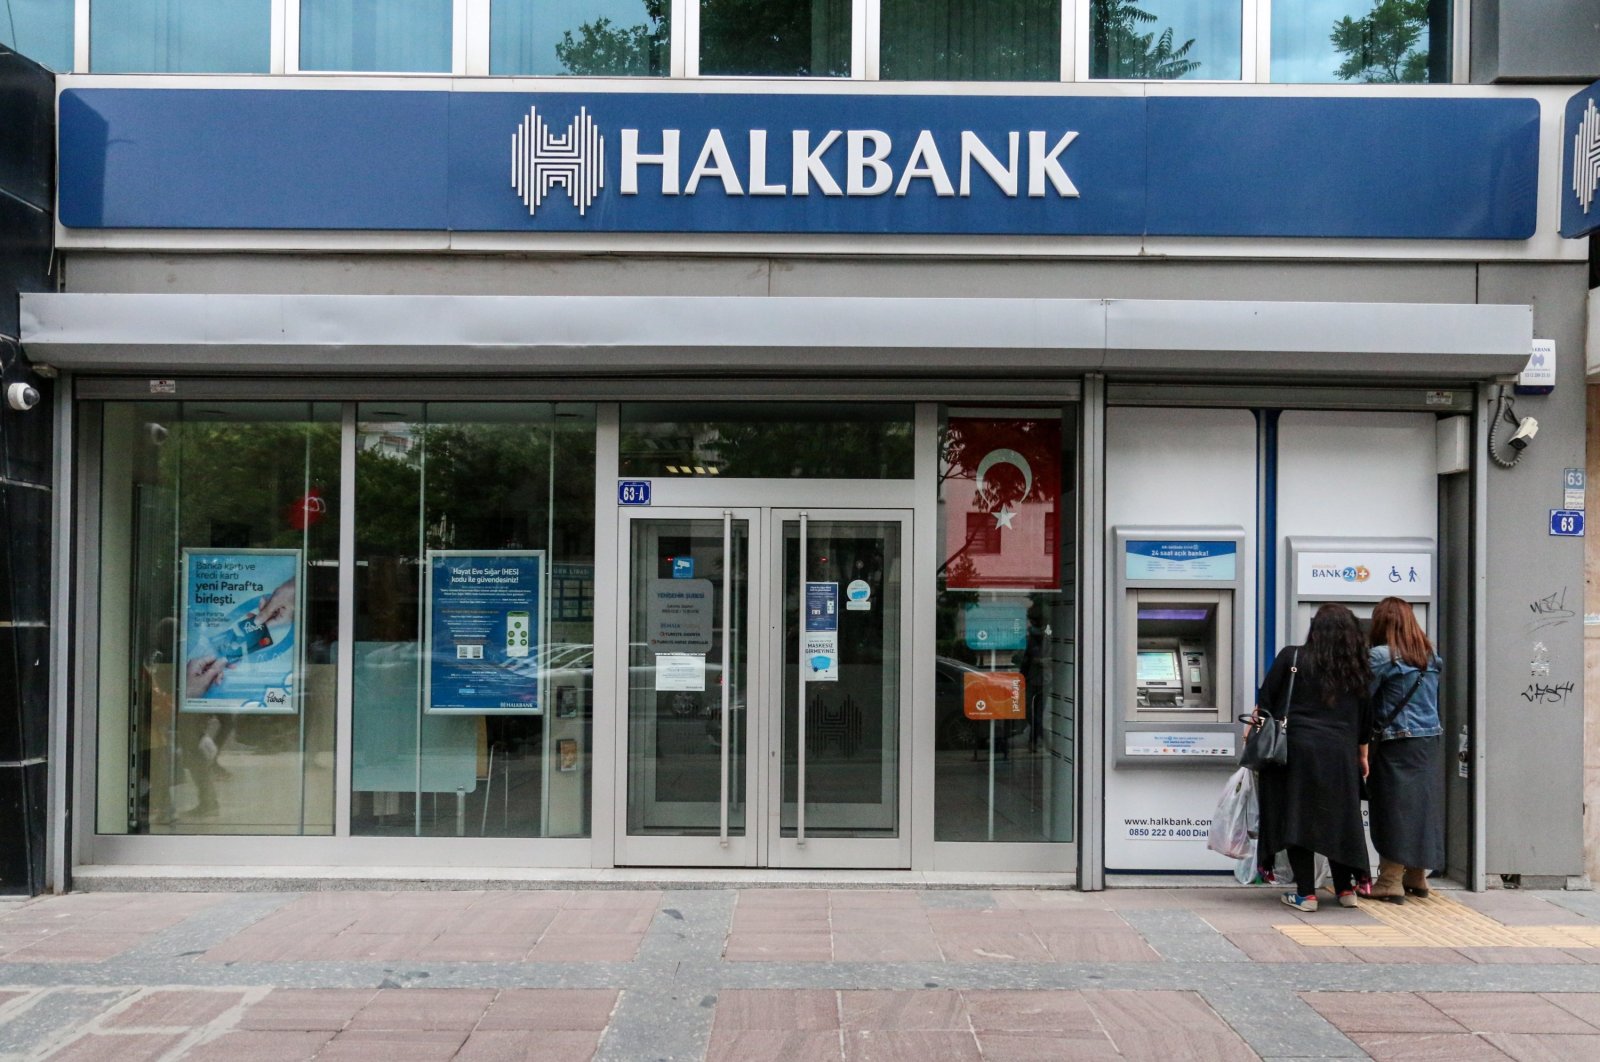 People are seen using ATM machines at a Halkbank branch in the capital Ankara, Türkiye, June 5, 2021. (Reuters Photo)